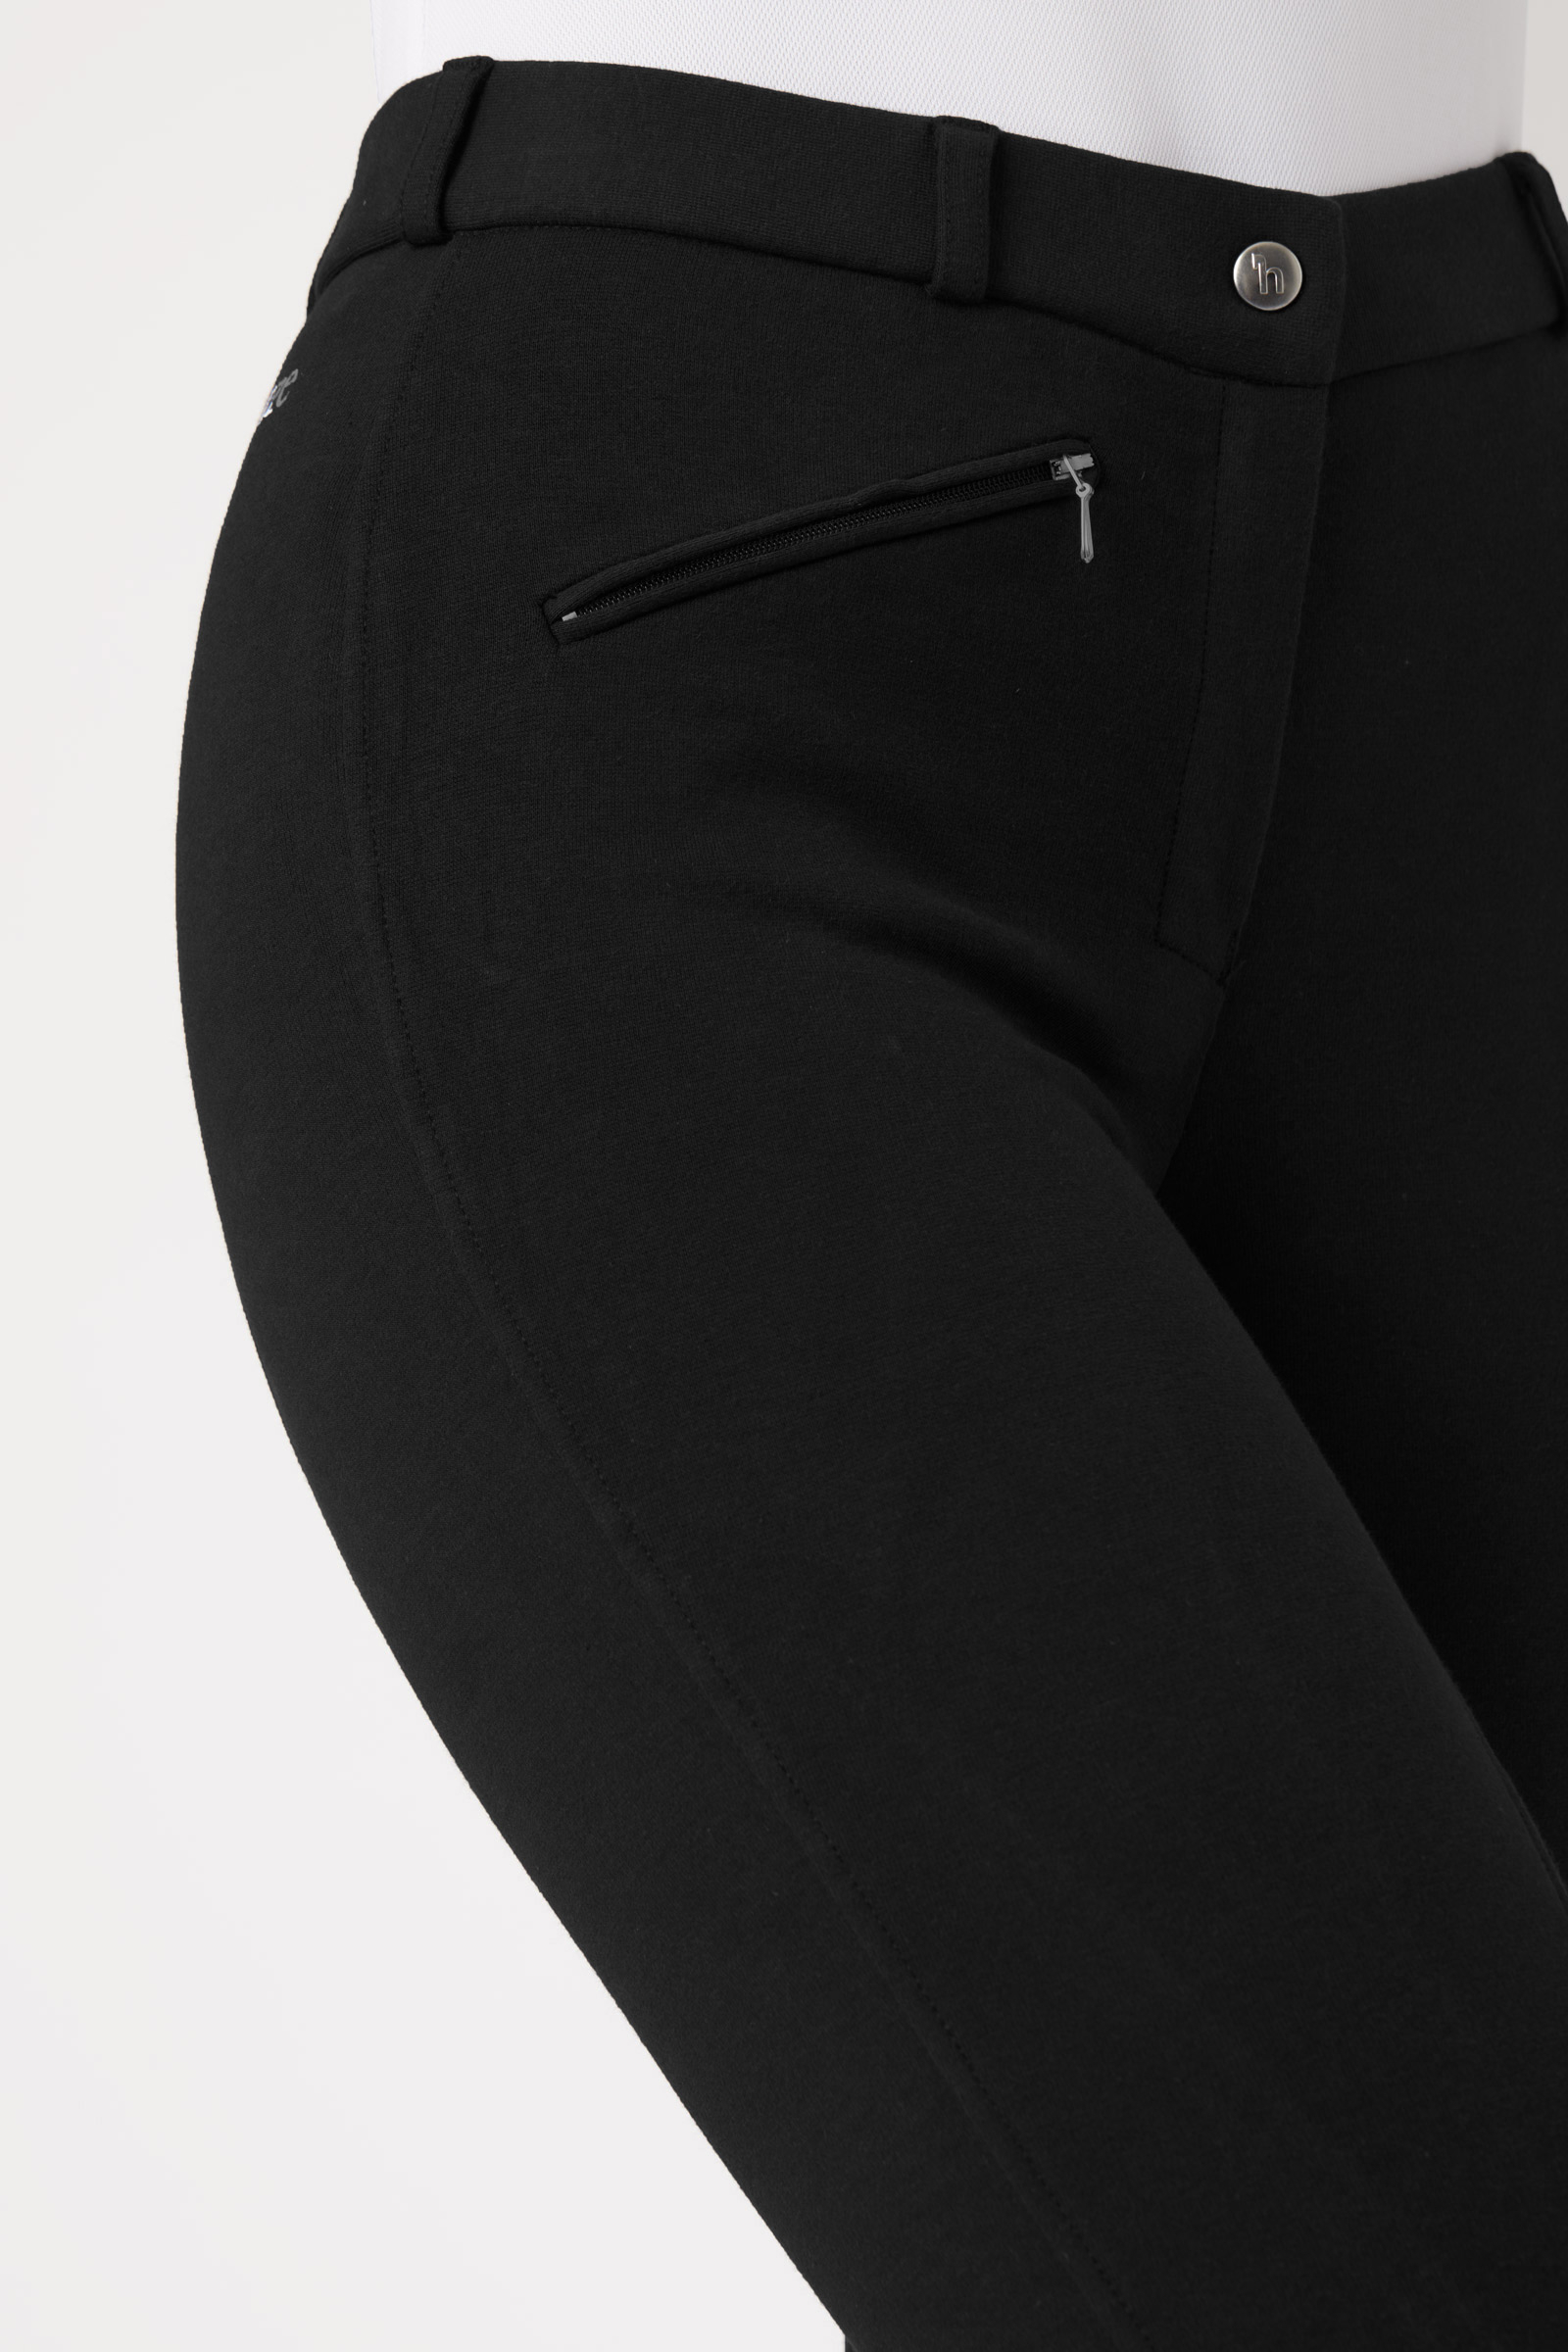 Thermal Fun Sport Silicone Breeches Color Black (BK) Size 42